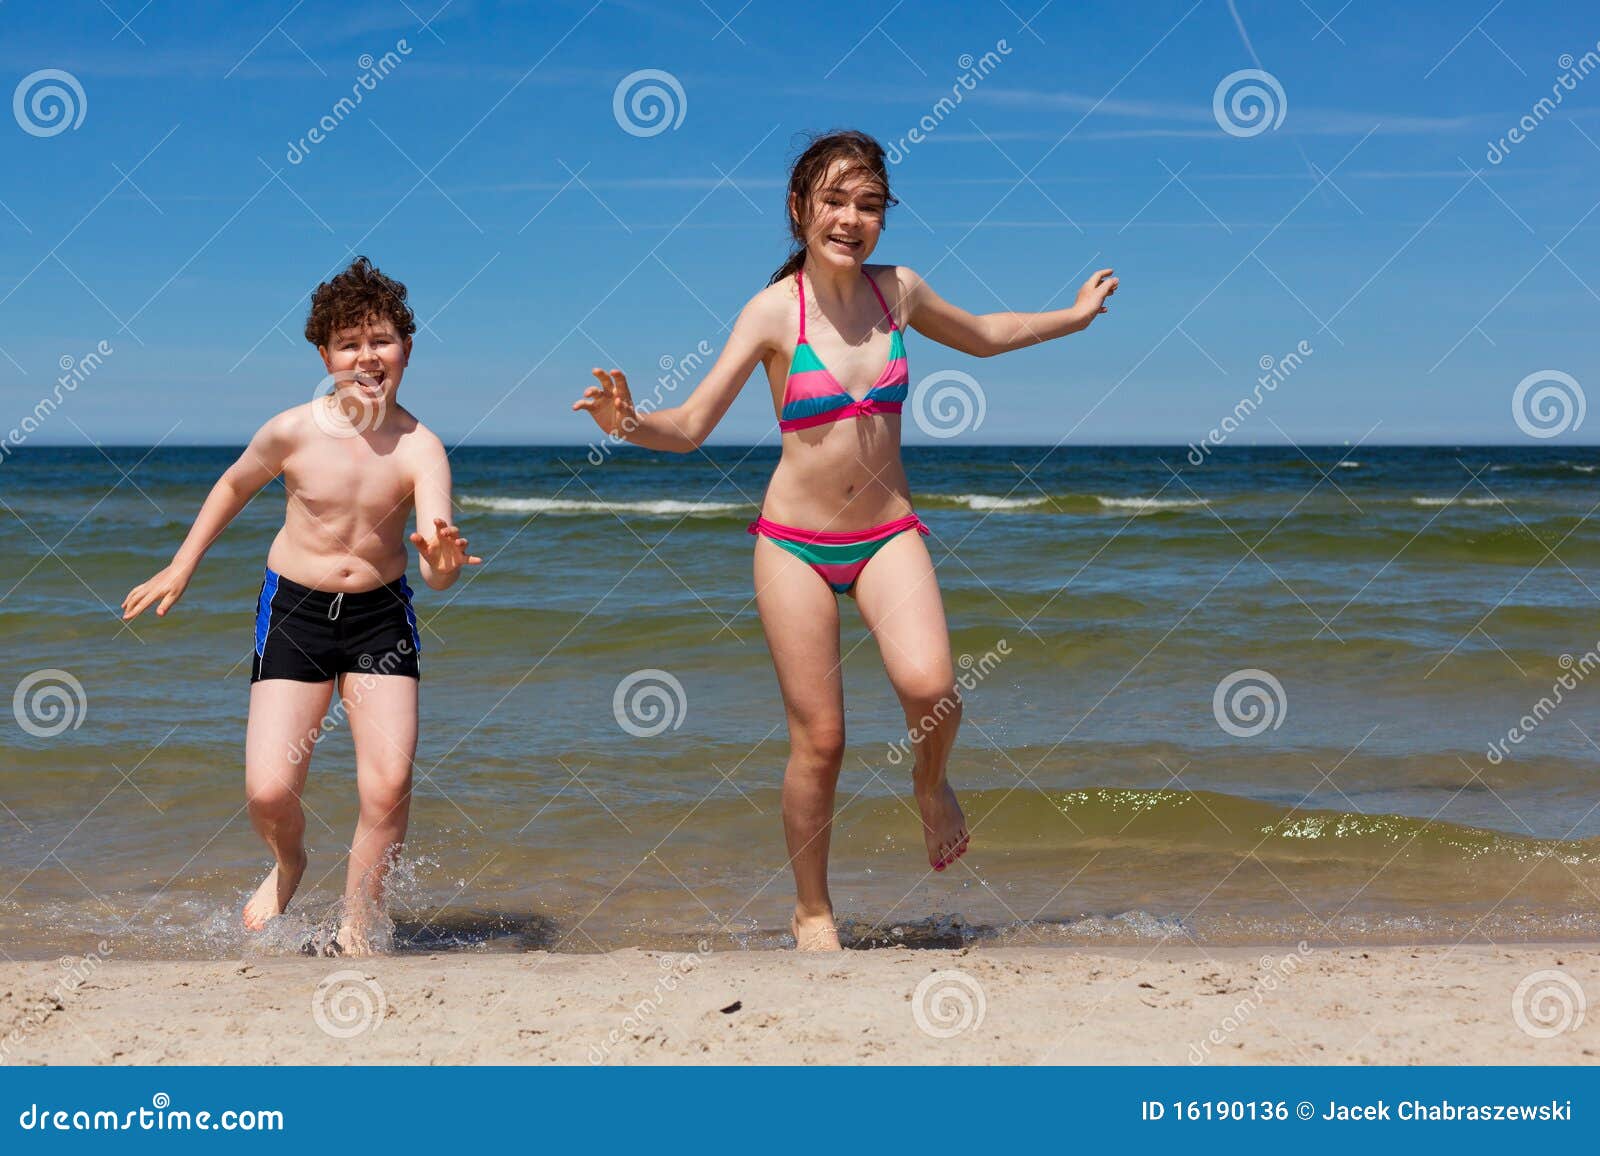 Kids running on beach stock photo. Image of jumping, enjoyment